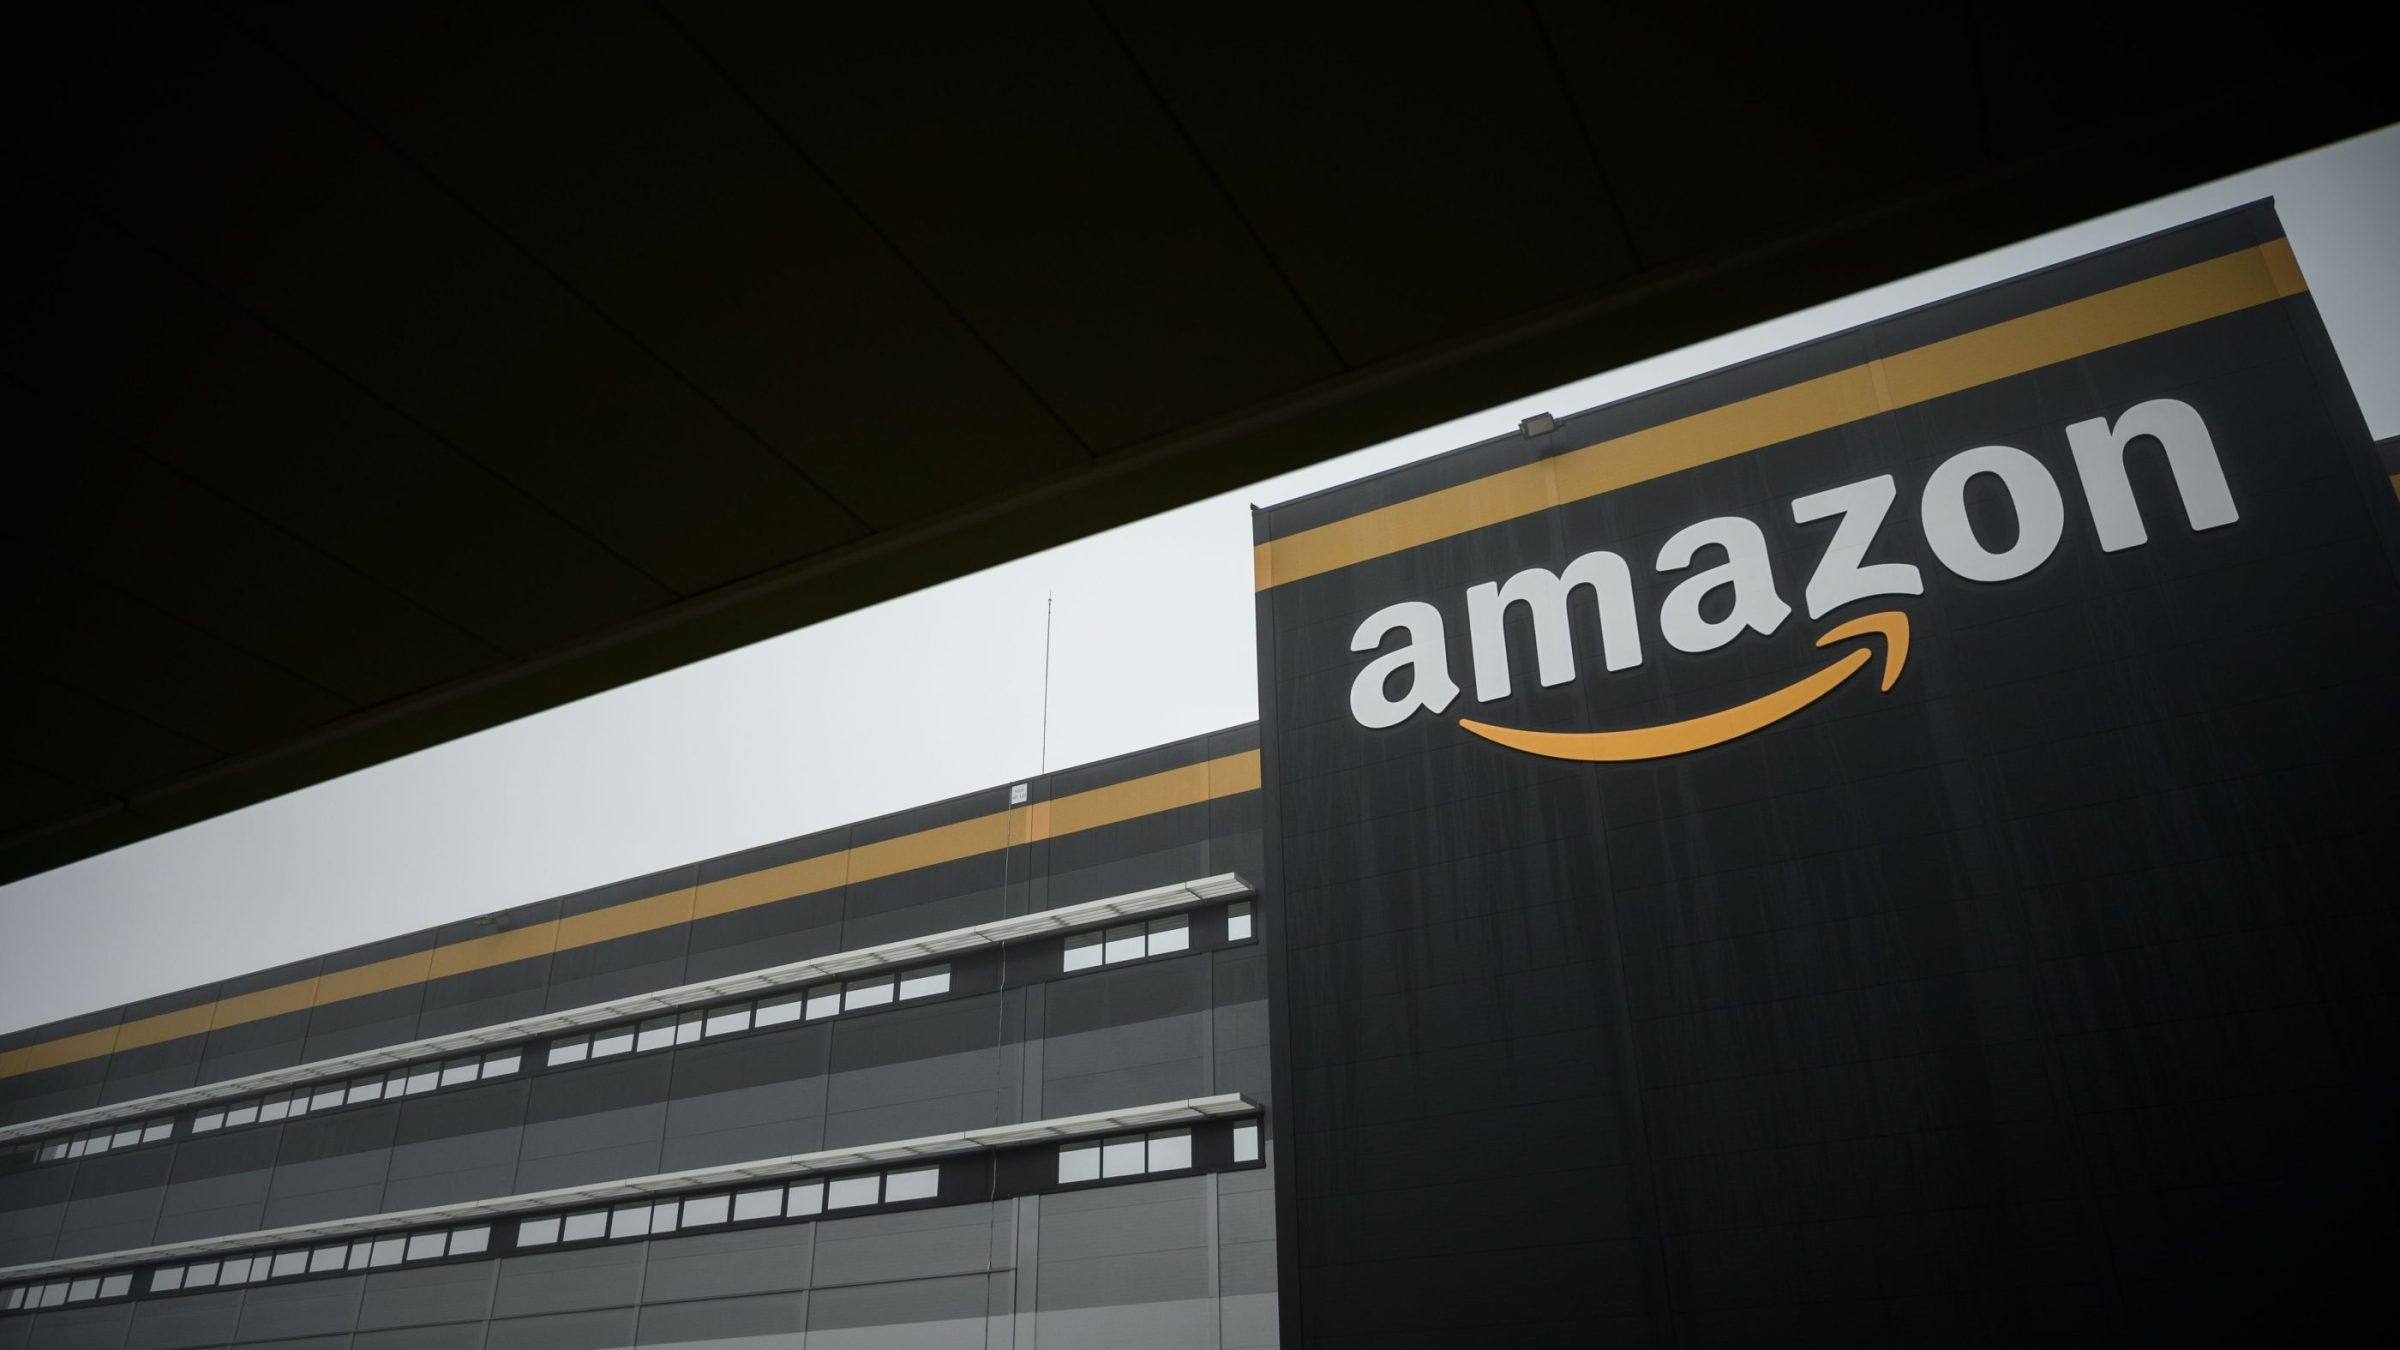 The Amazon logo at a new Amazon warehouse, set against a black sky.